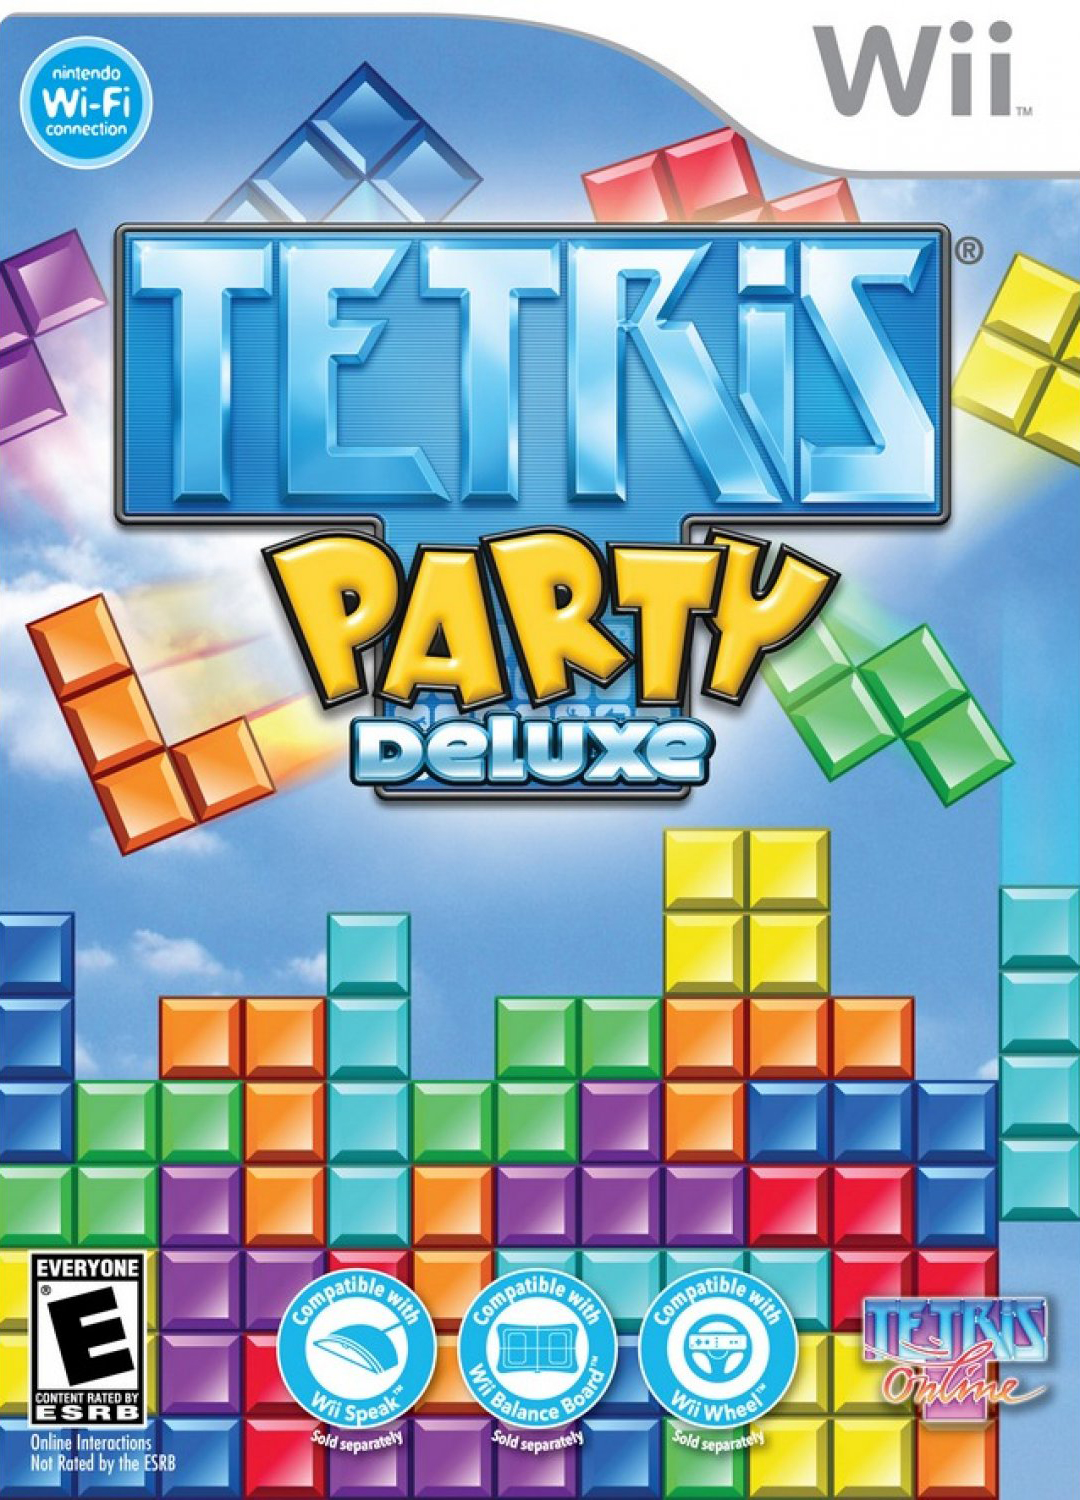 tetris with little man